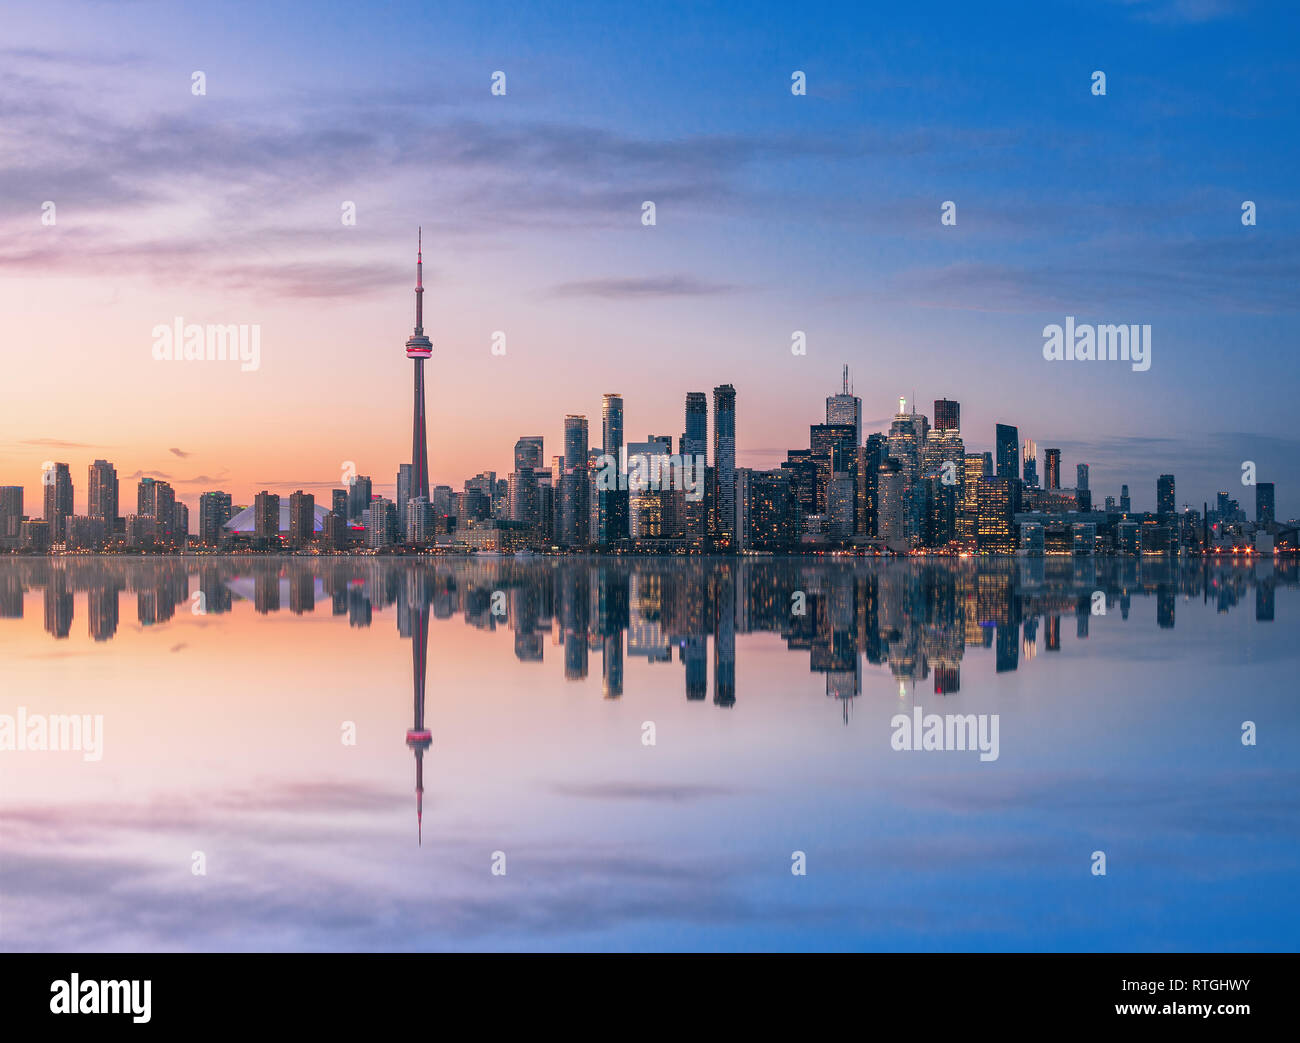 Toronto Skyline at sunset with reflection - Toronto, Ontario, Canada Stock Photo